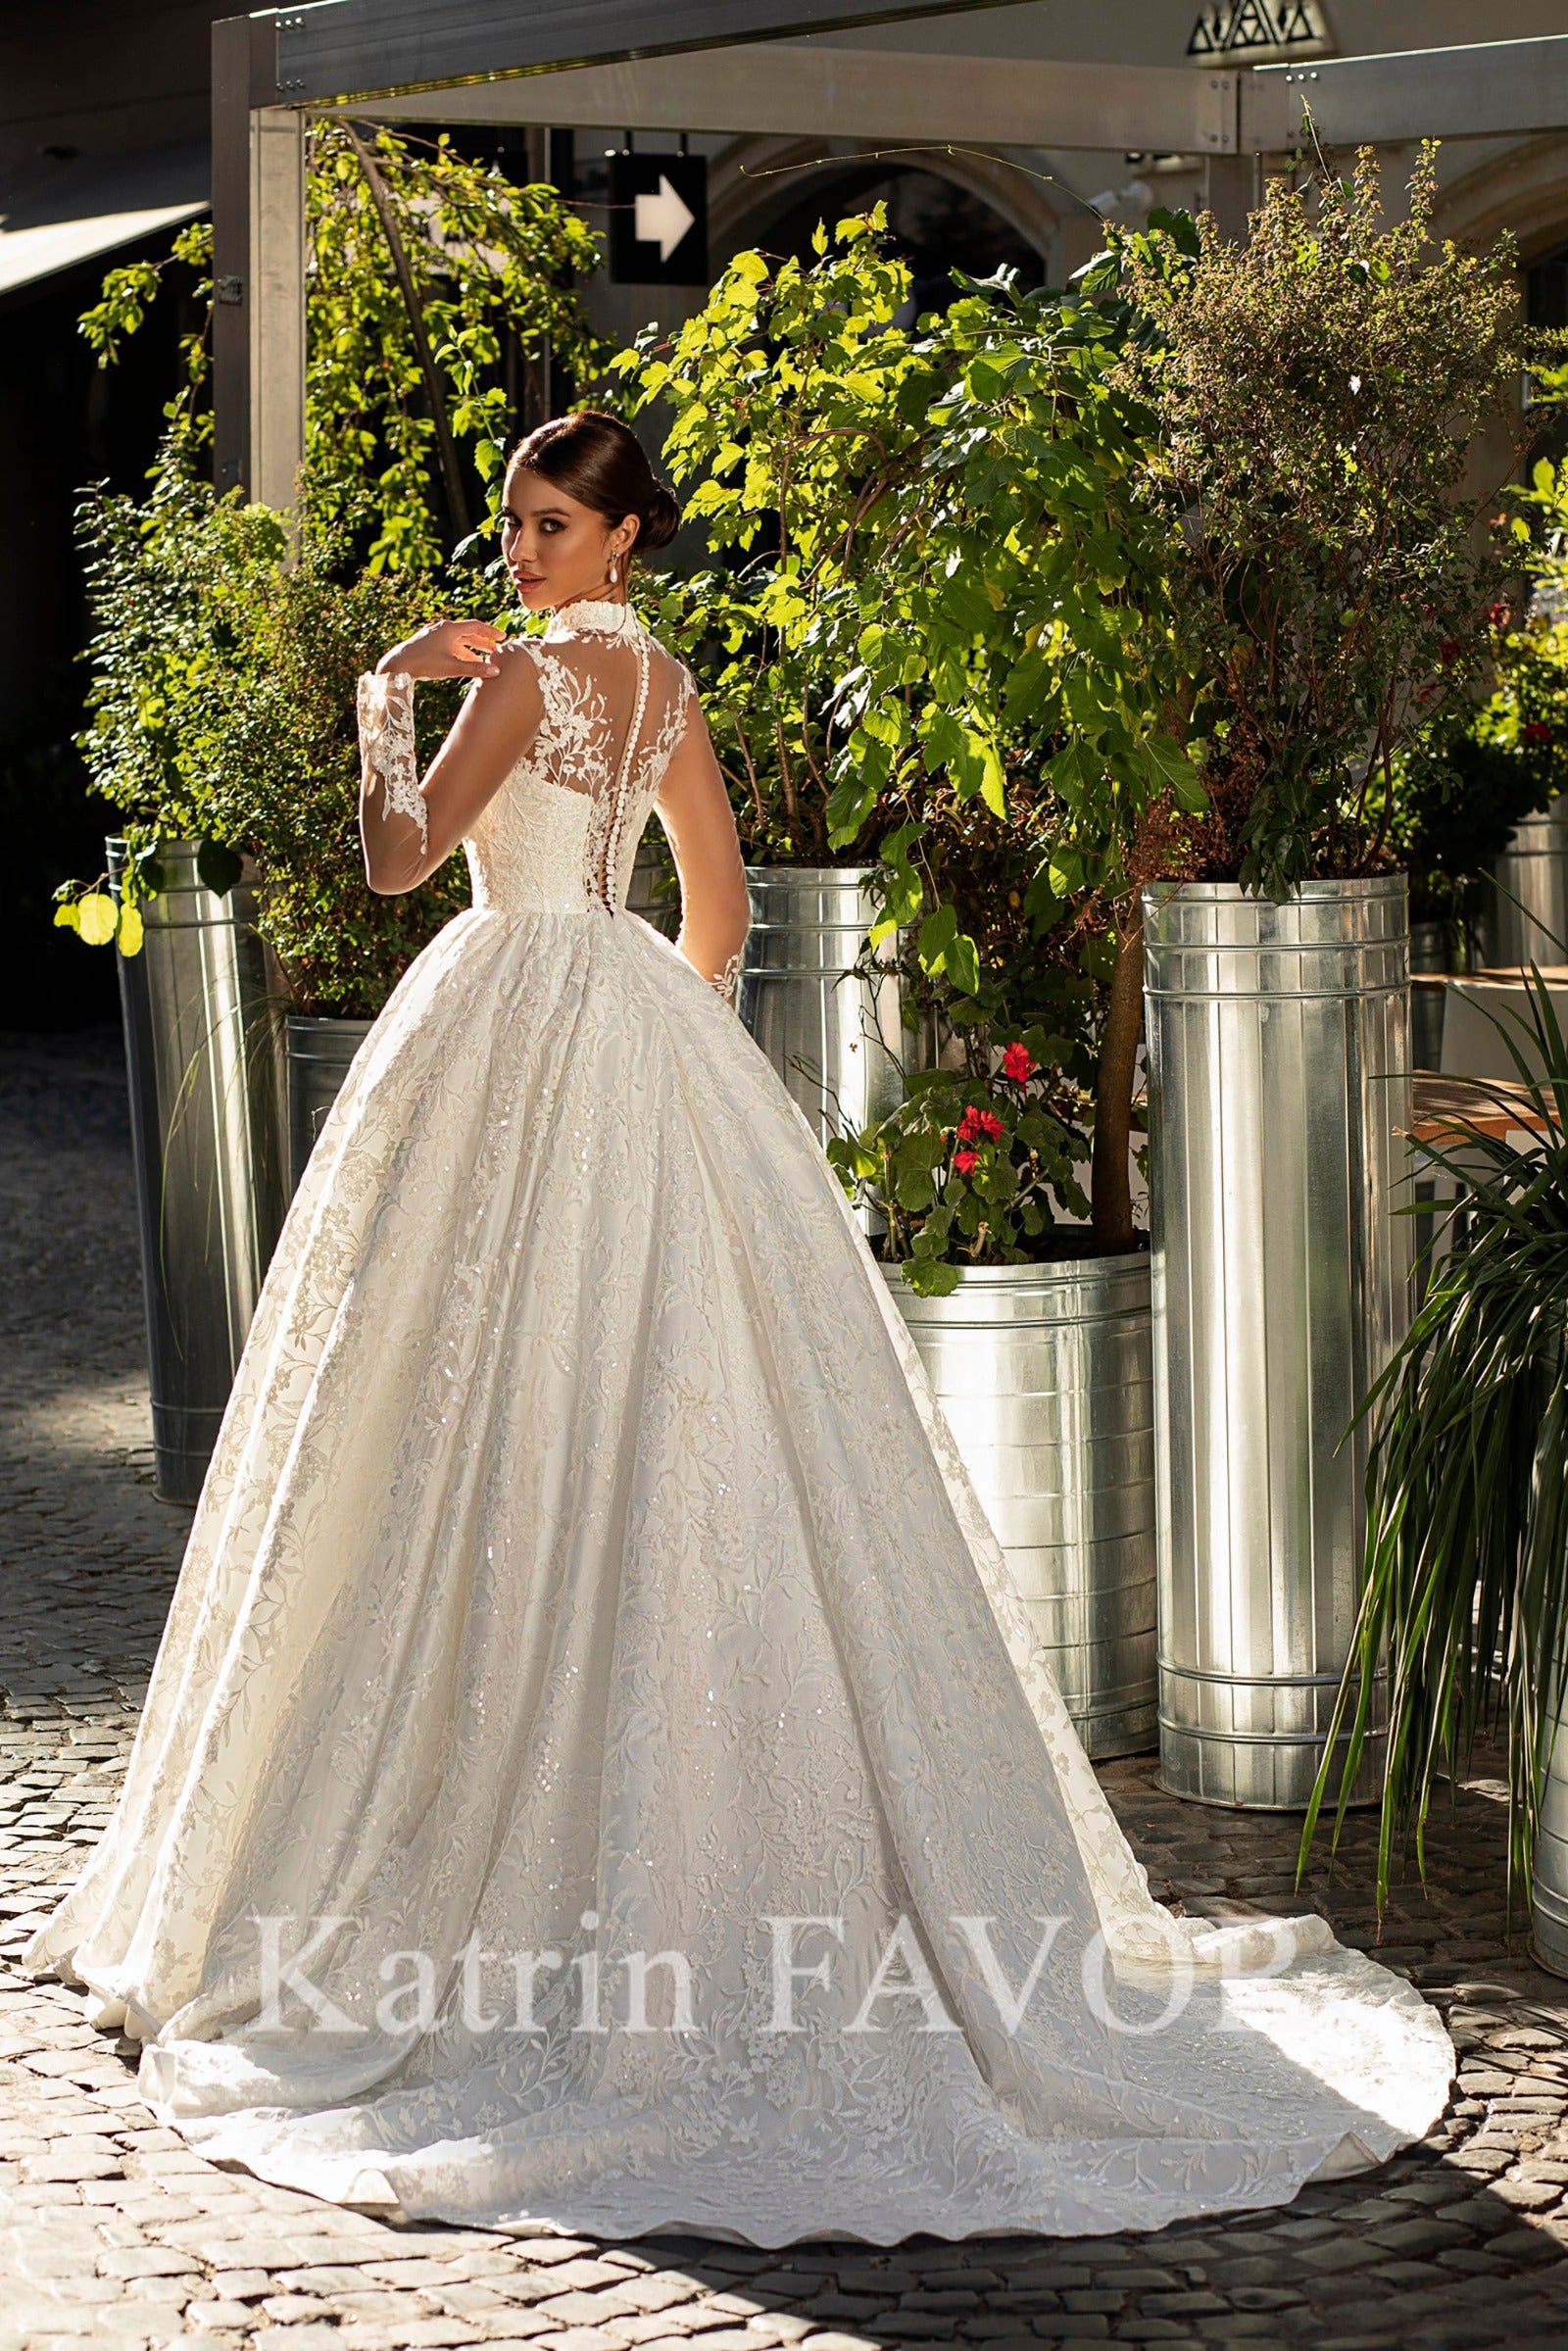 Lace ballgown princess wedding dress